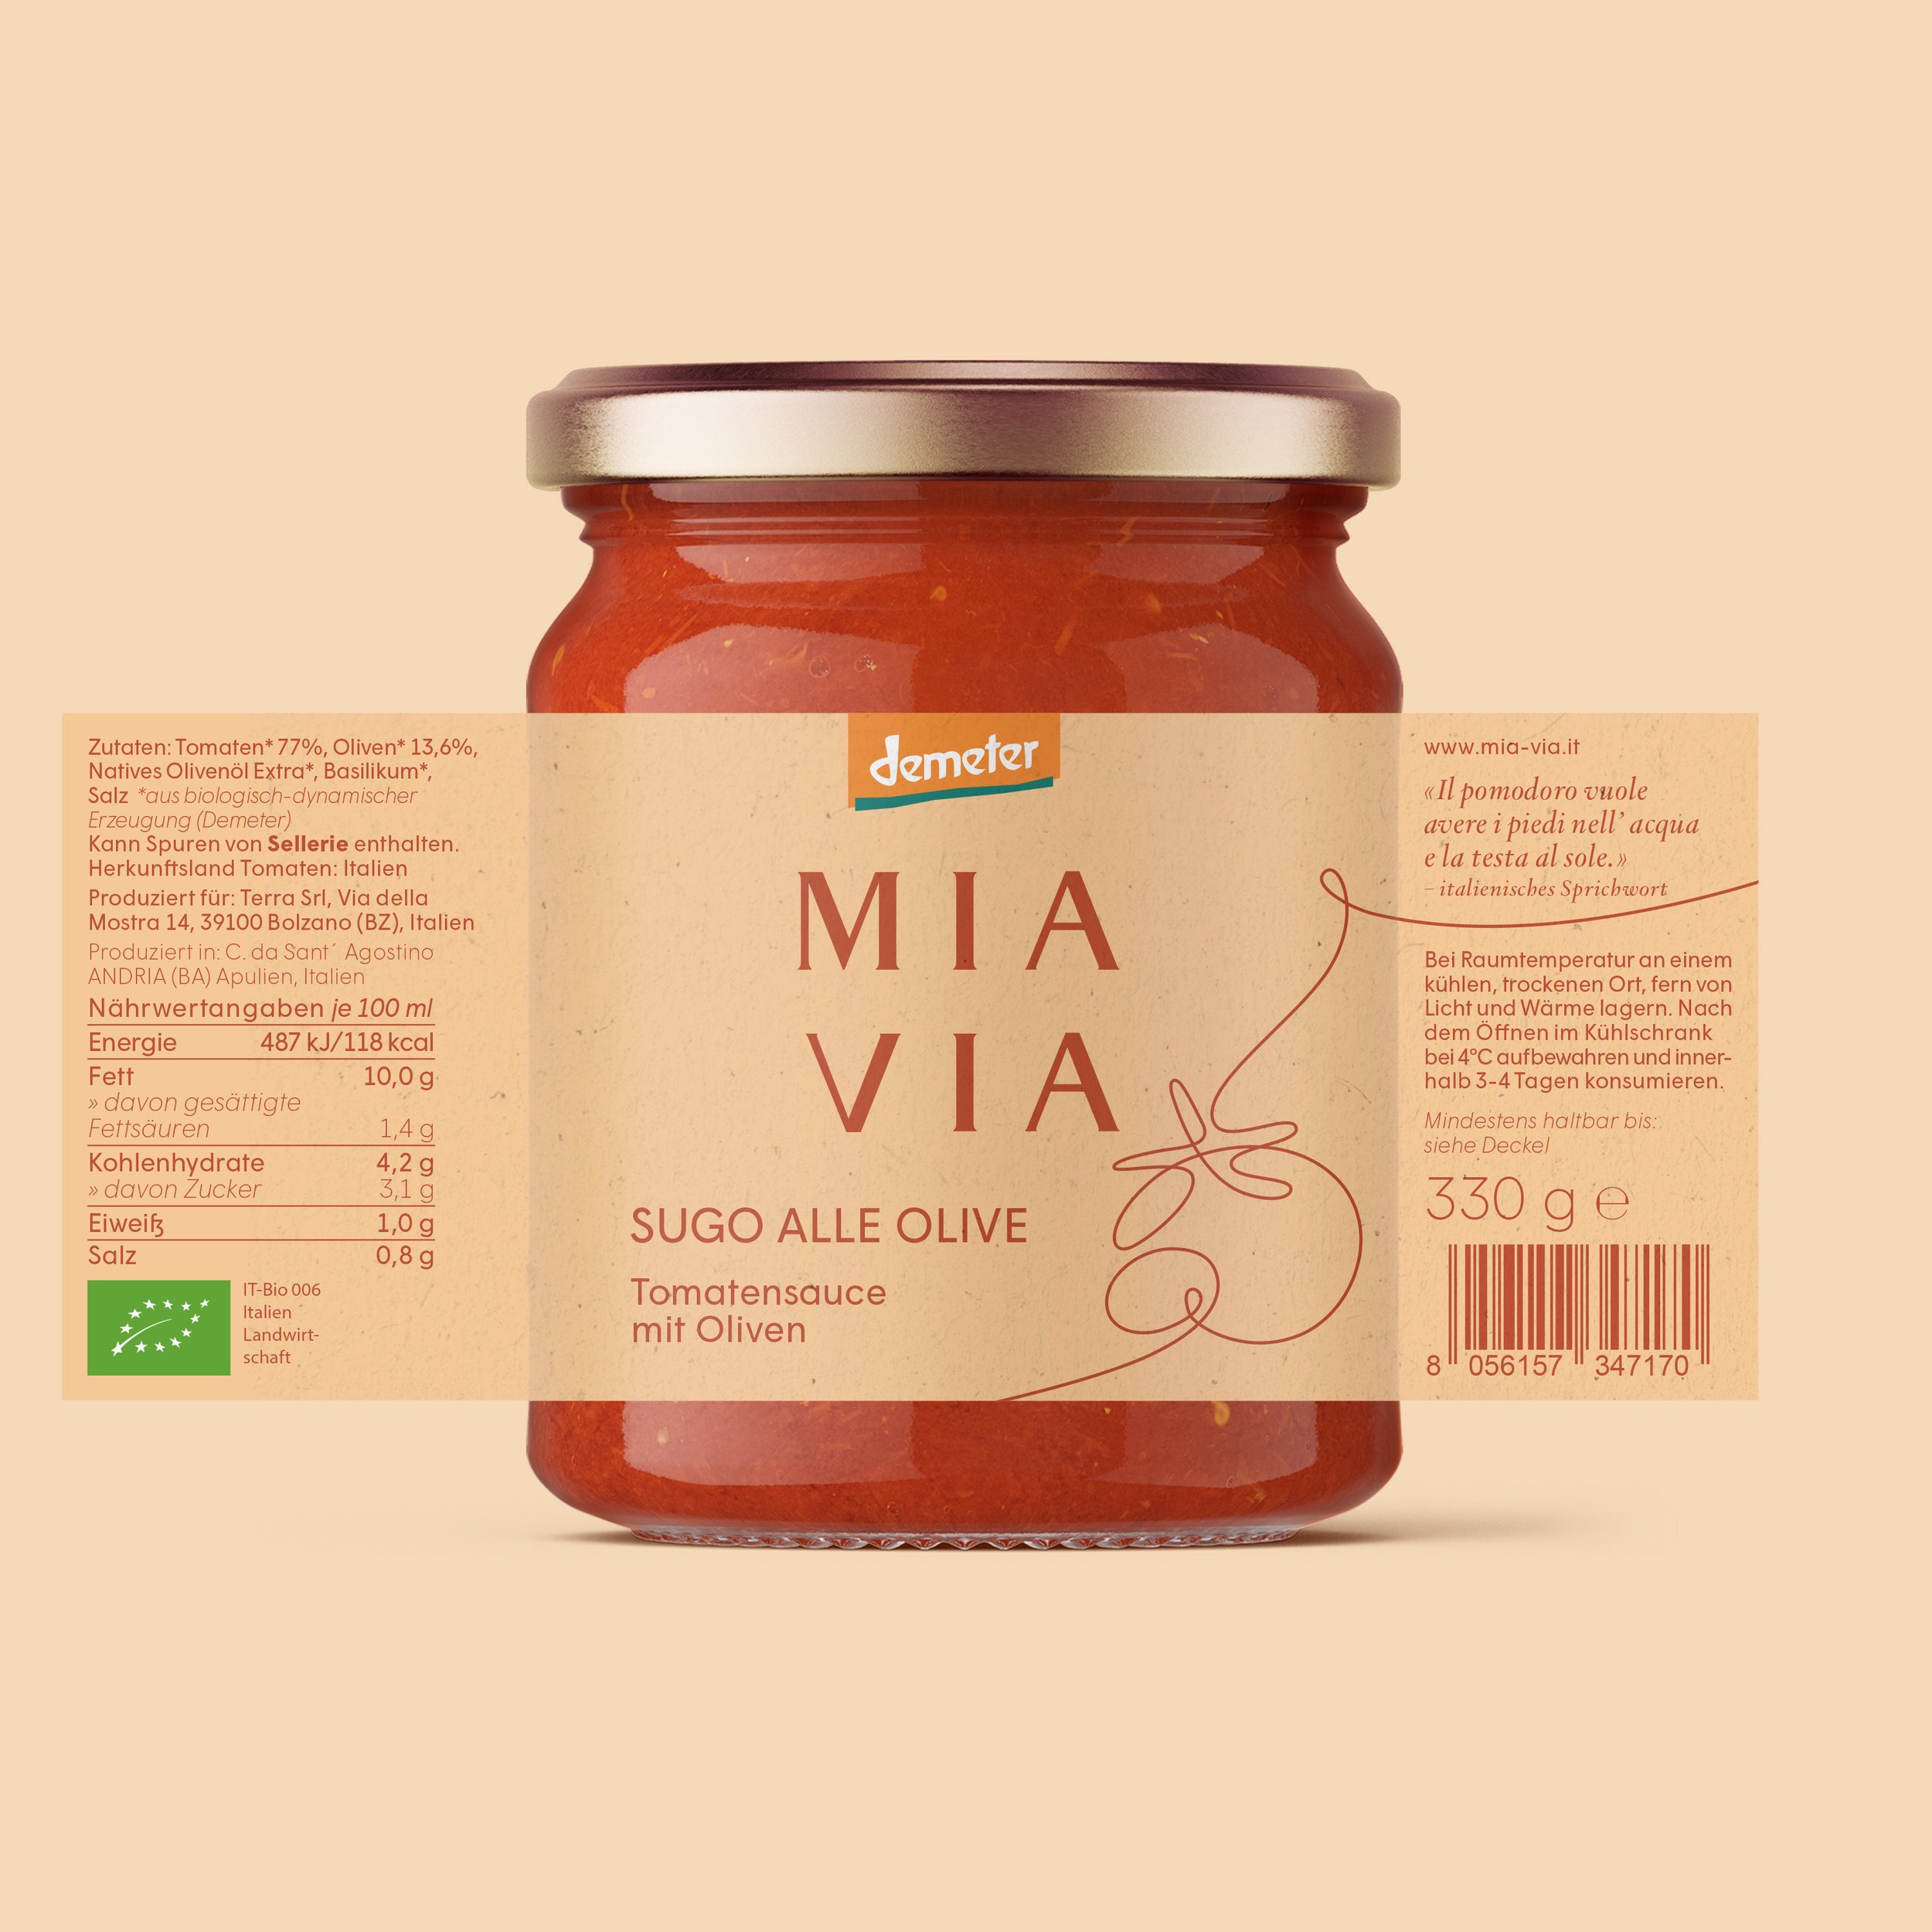 mia-via-tomato-sauce-sugo-olive-packaging-design.jpg